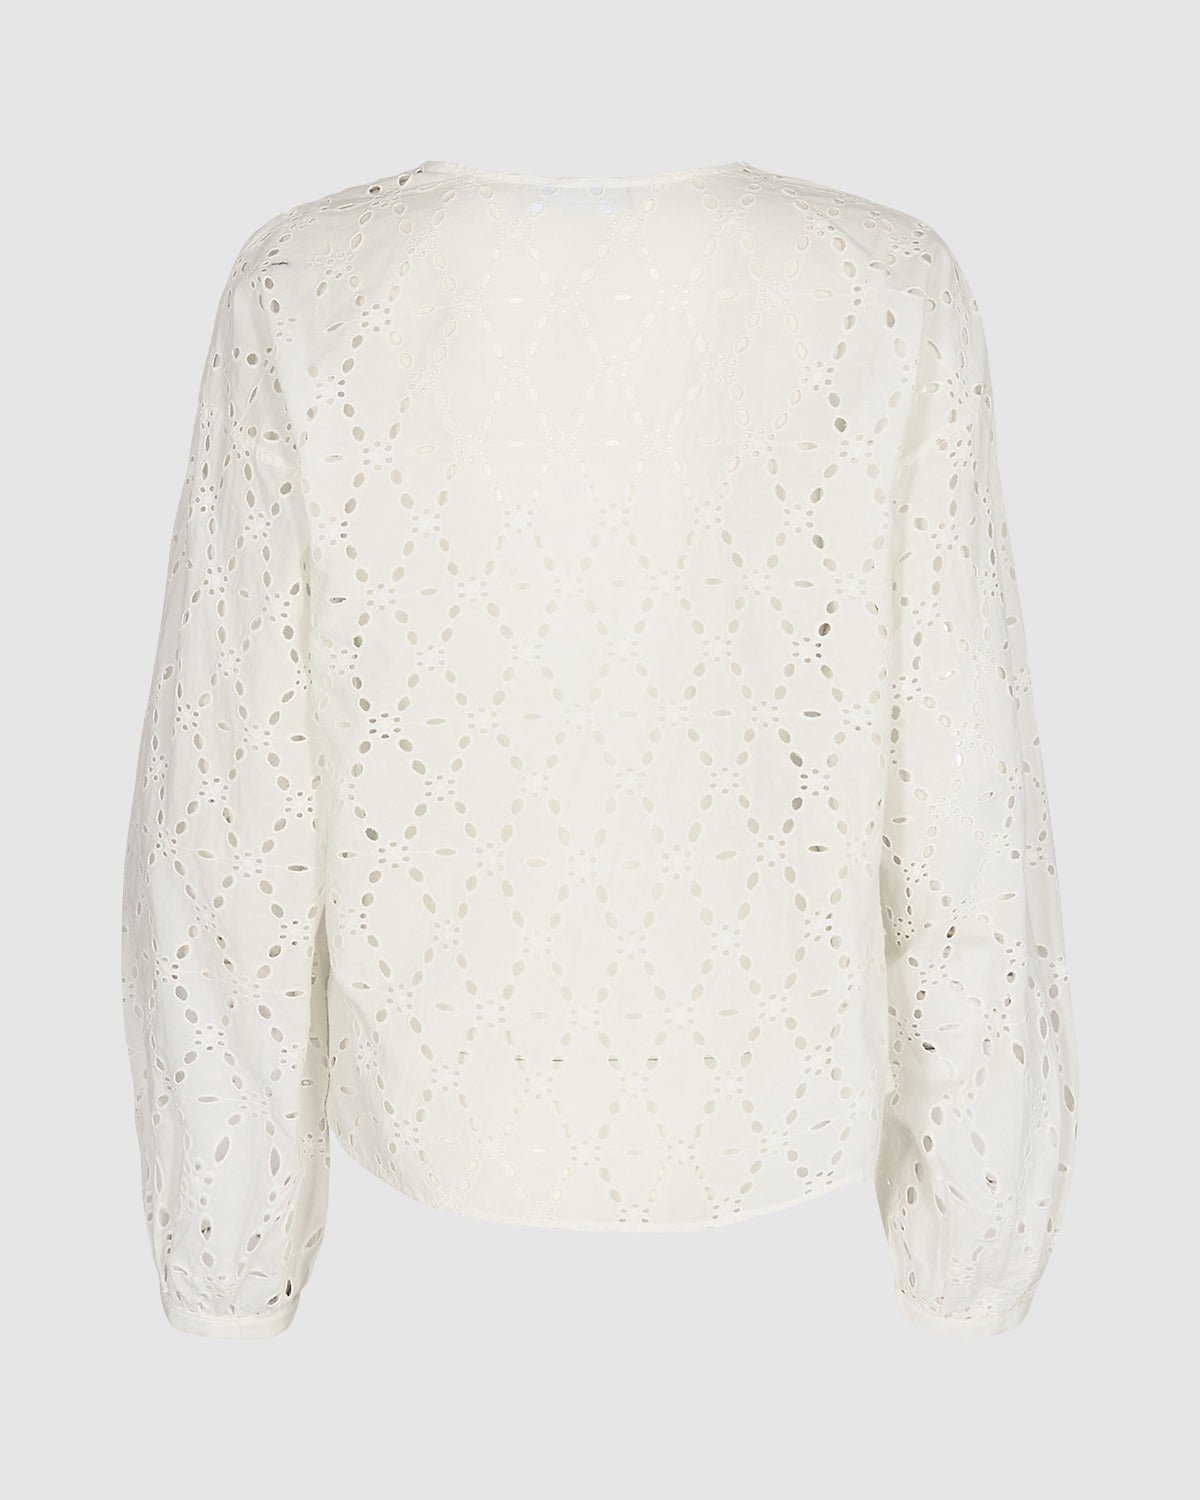 MINIMUM - Lipana short sleeved shirt 9777 - Boutique Bubbles